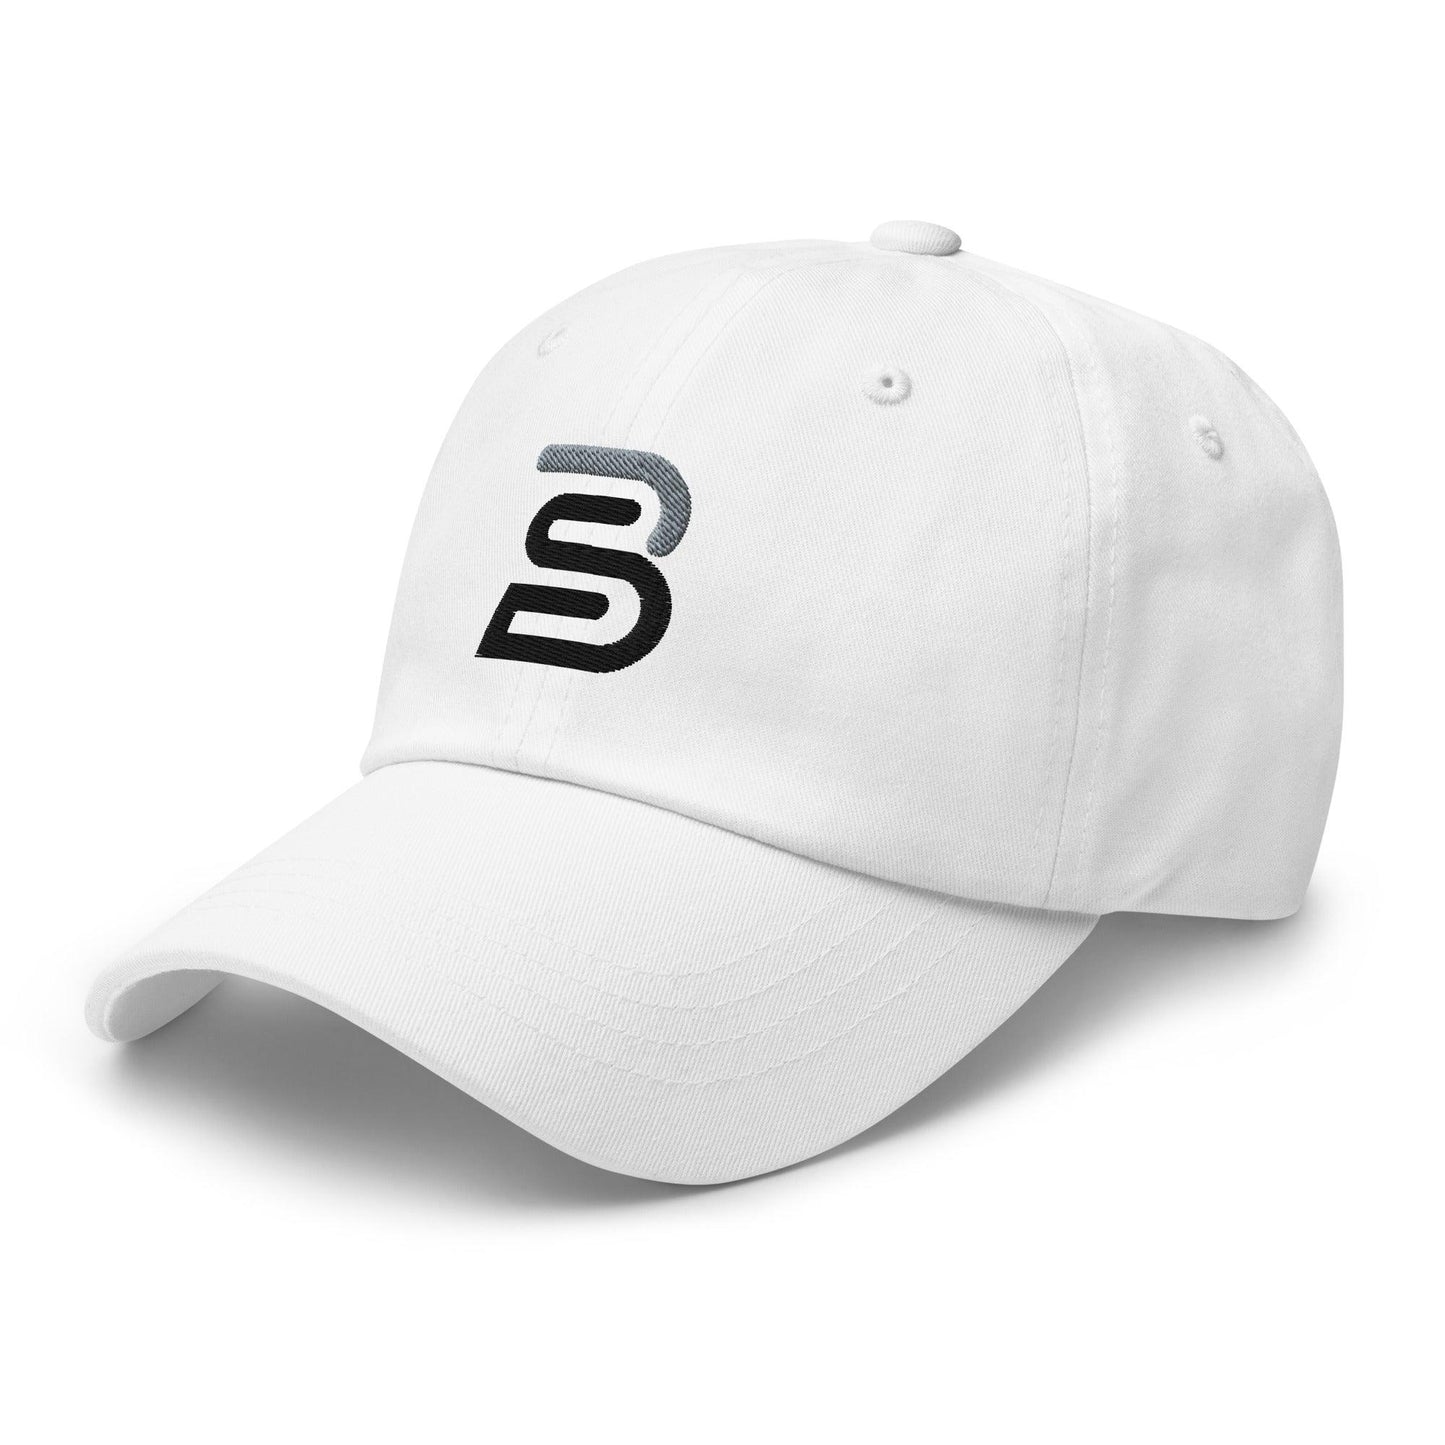 Bennett Sousa “BS” hat - Fan Arch